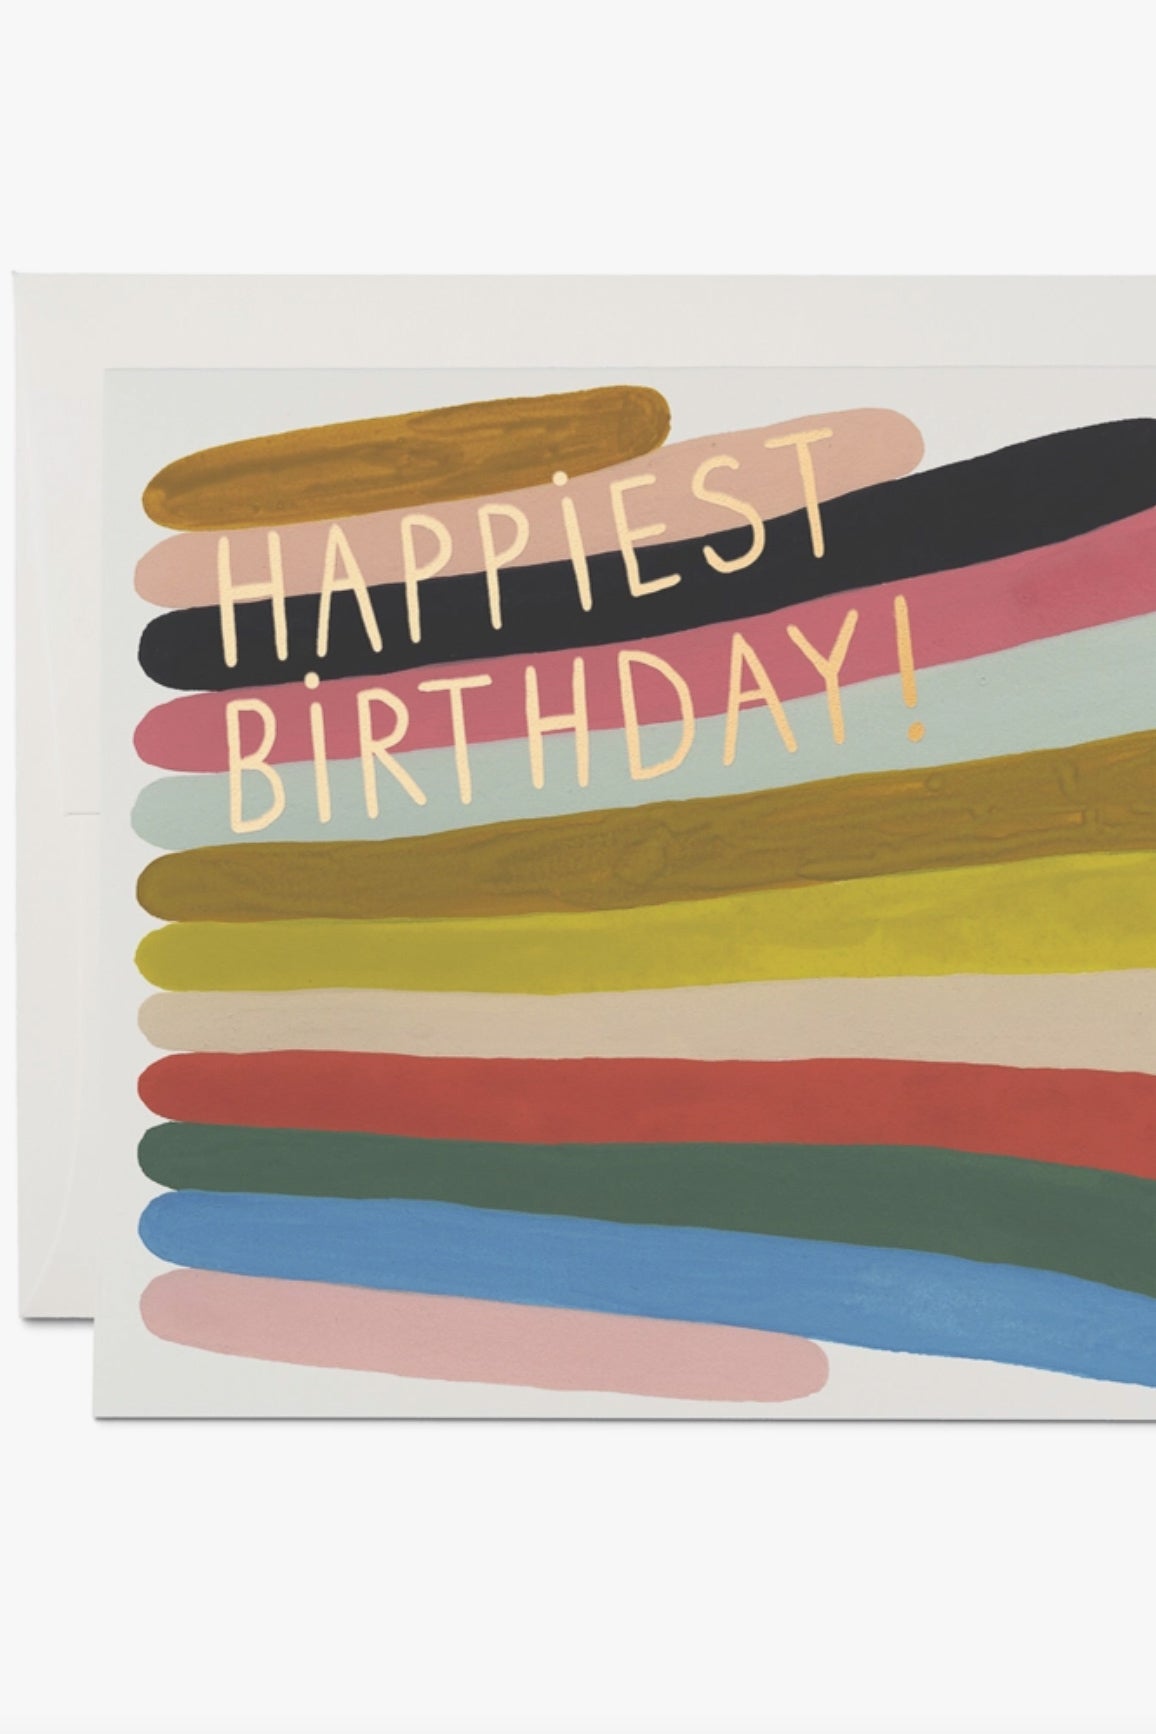 Red Cap Cards - Rainbow Stripes Birthday Card